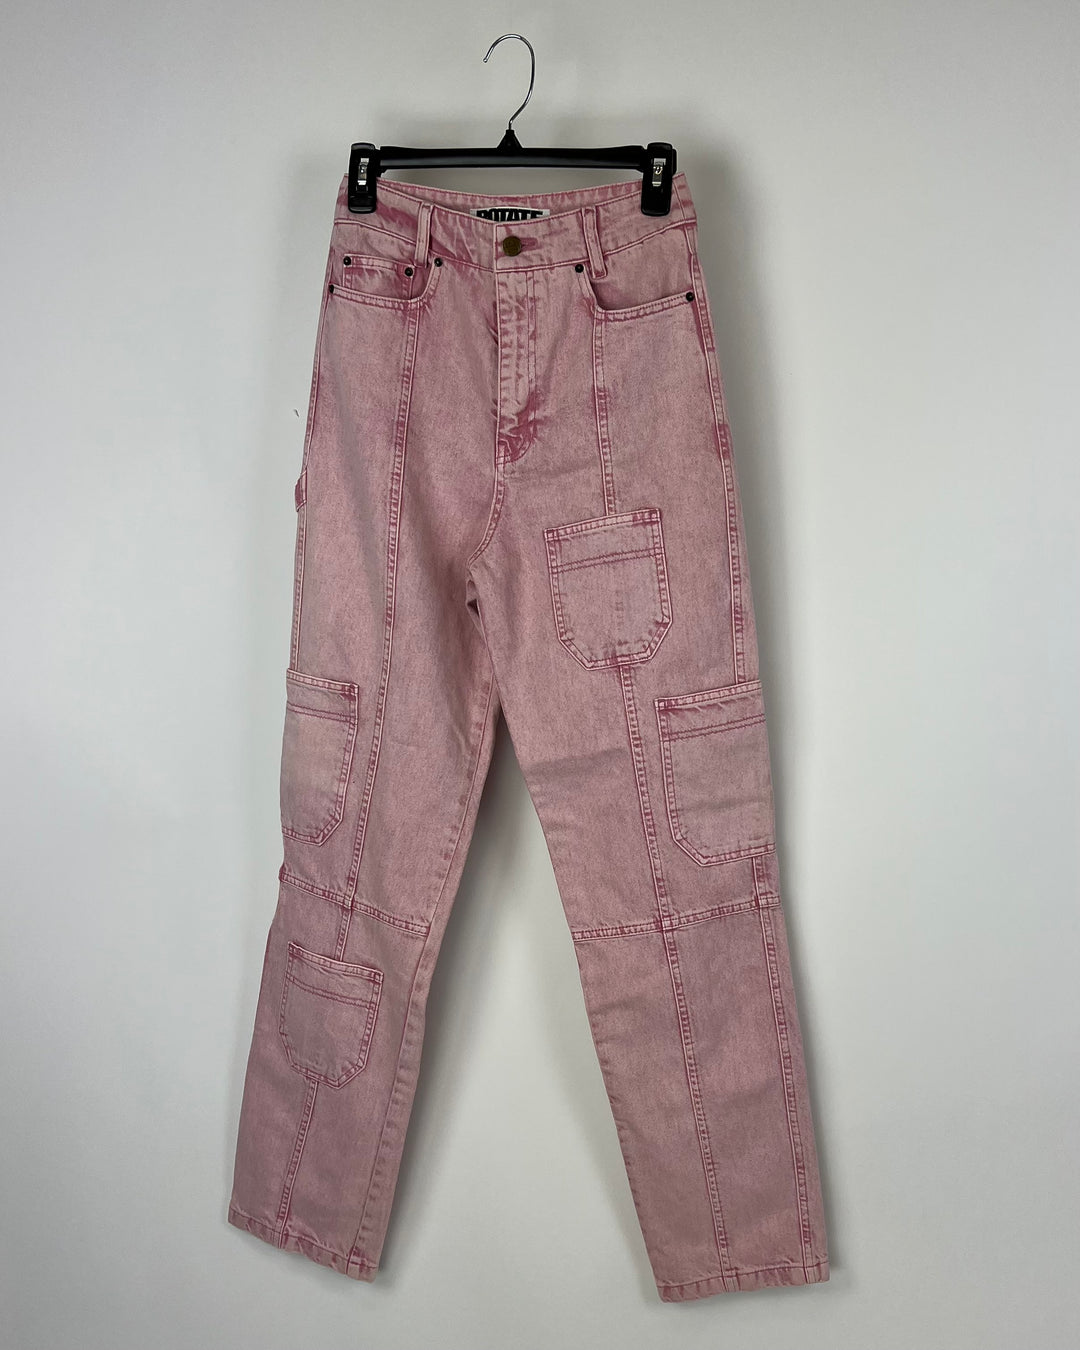 Pink Denim Cargo Pants - Size 26